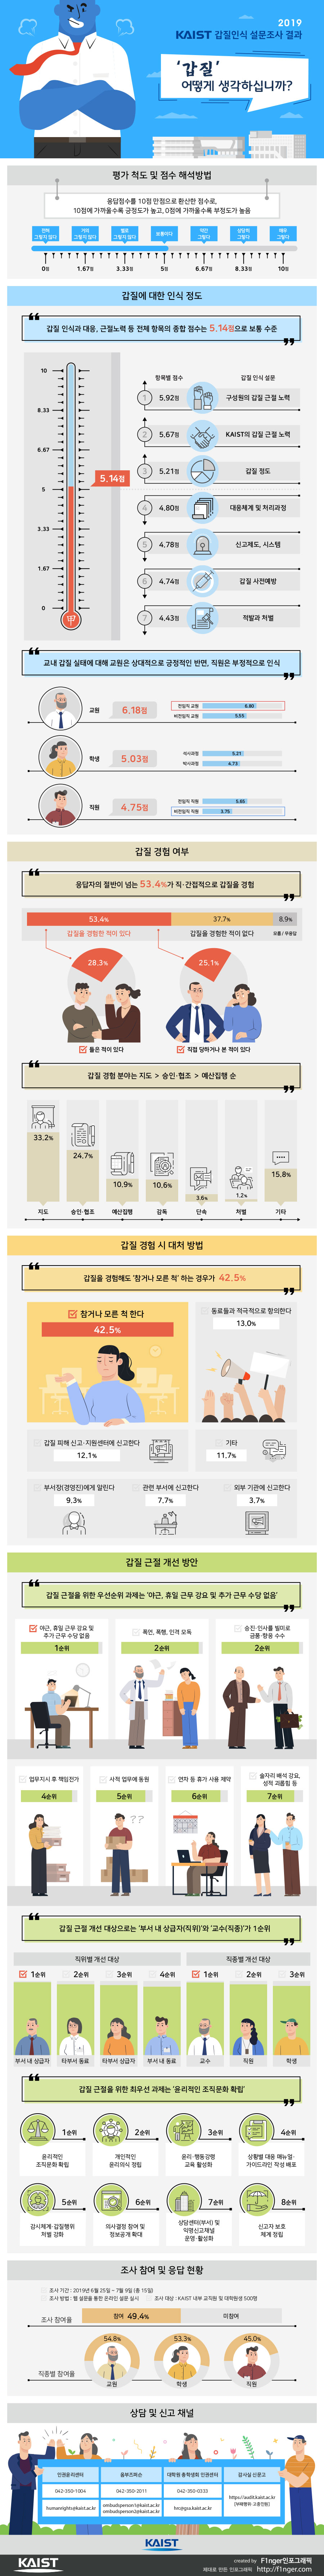 KAIST 2019 갑질인식 설문조사 결과 통계 인포그래픽_by F1nger